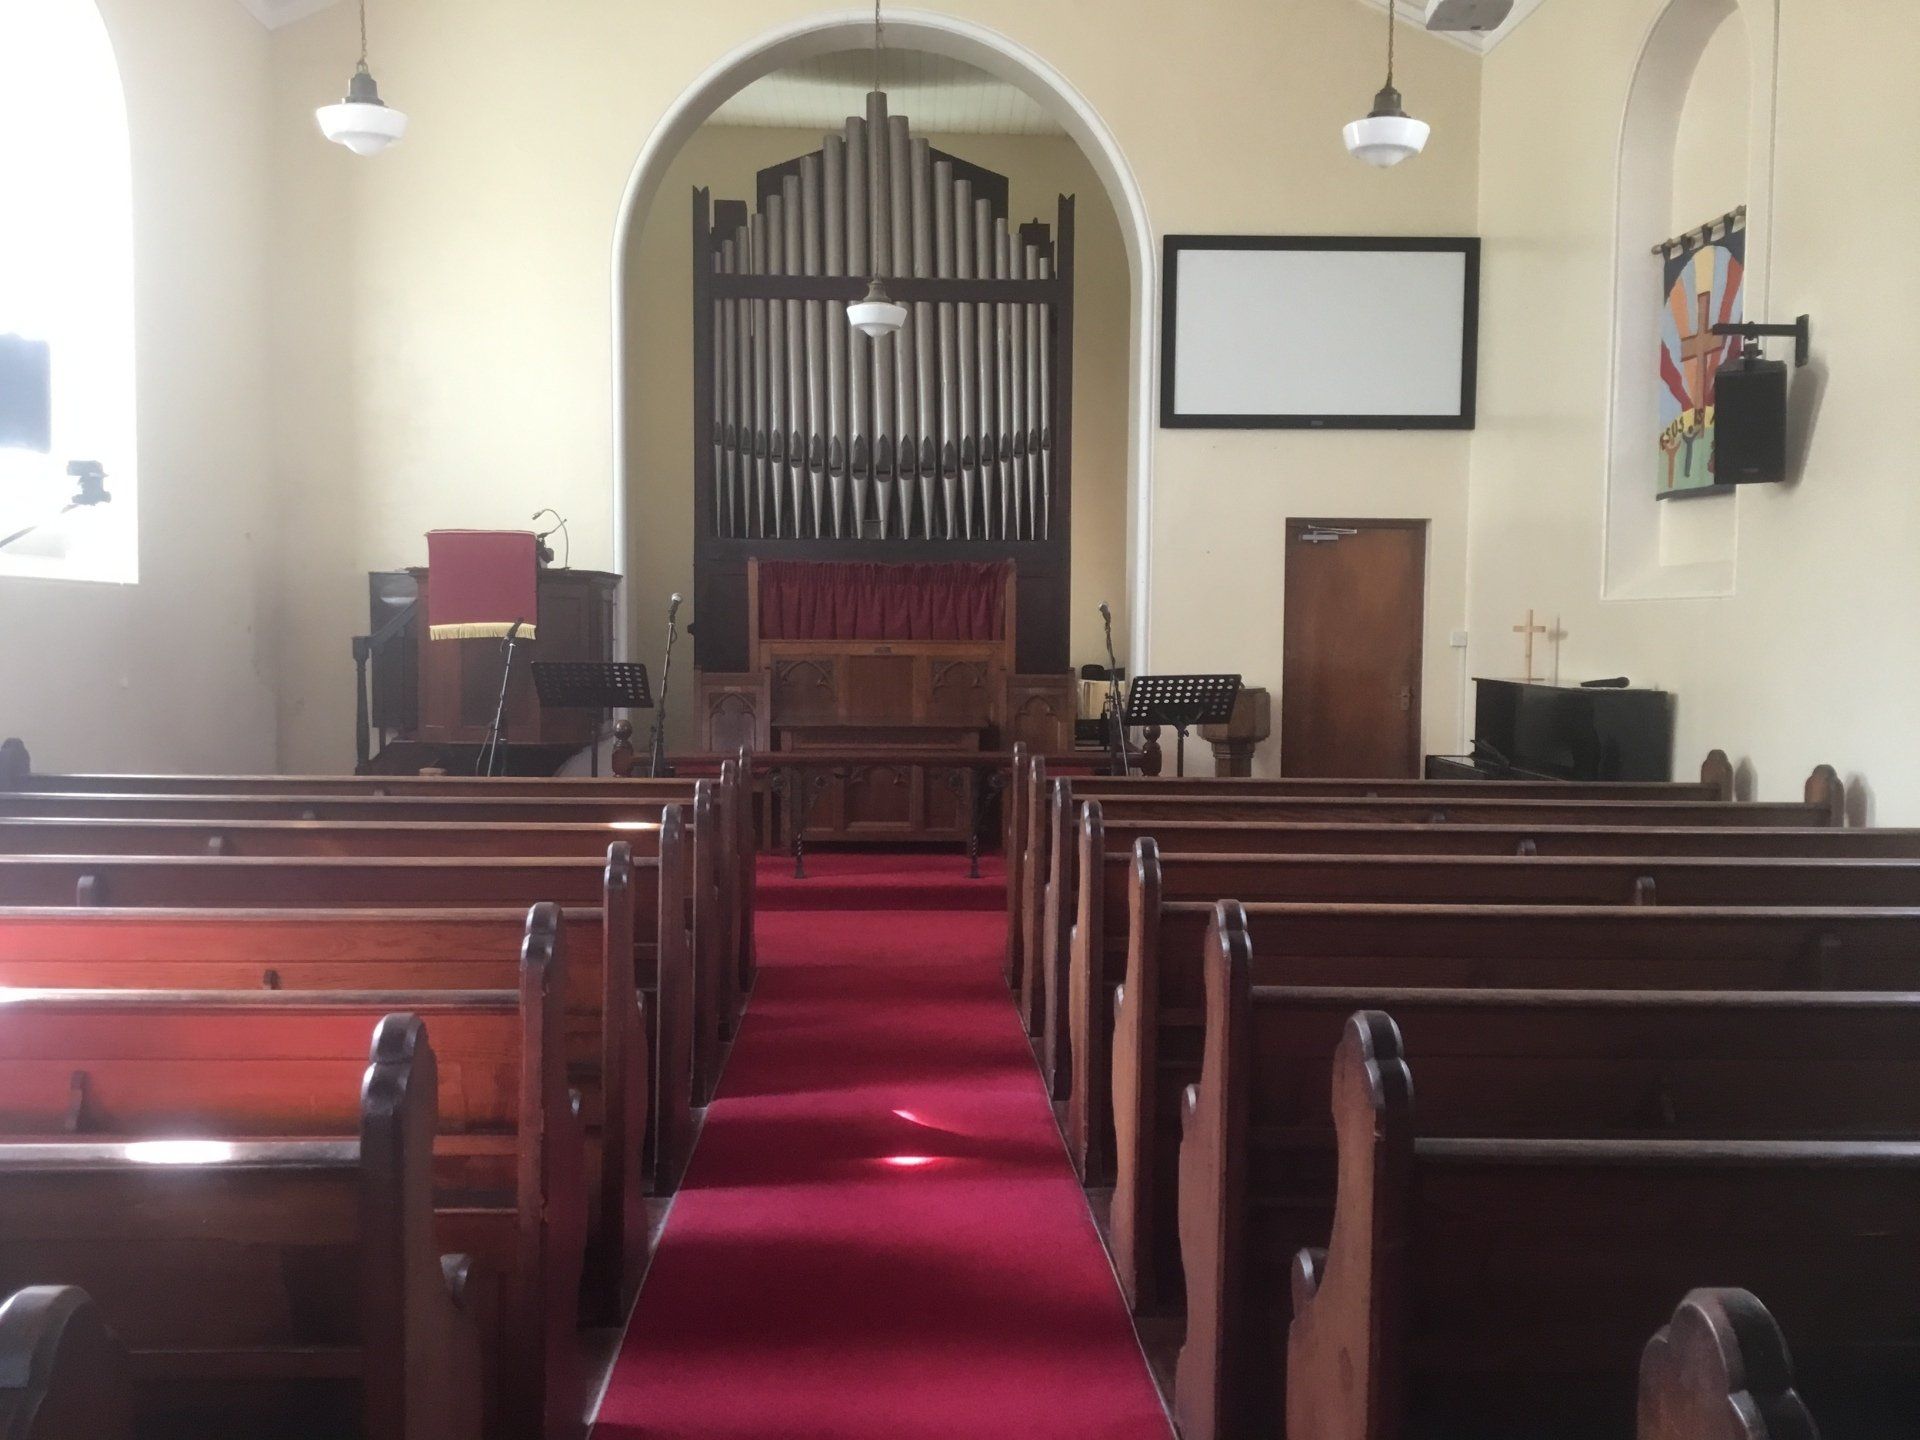 Photograph of Craigmore Methodist Church, Building Interior